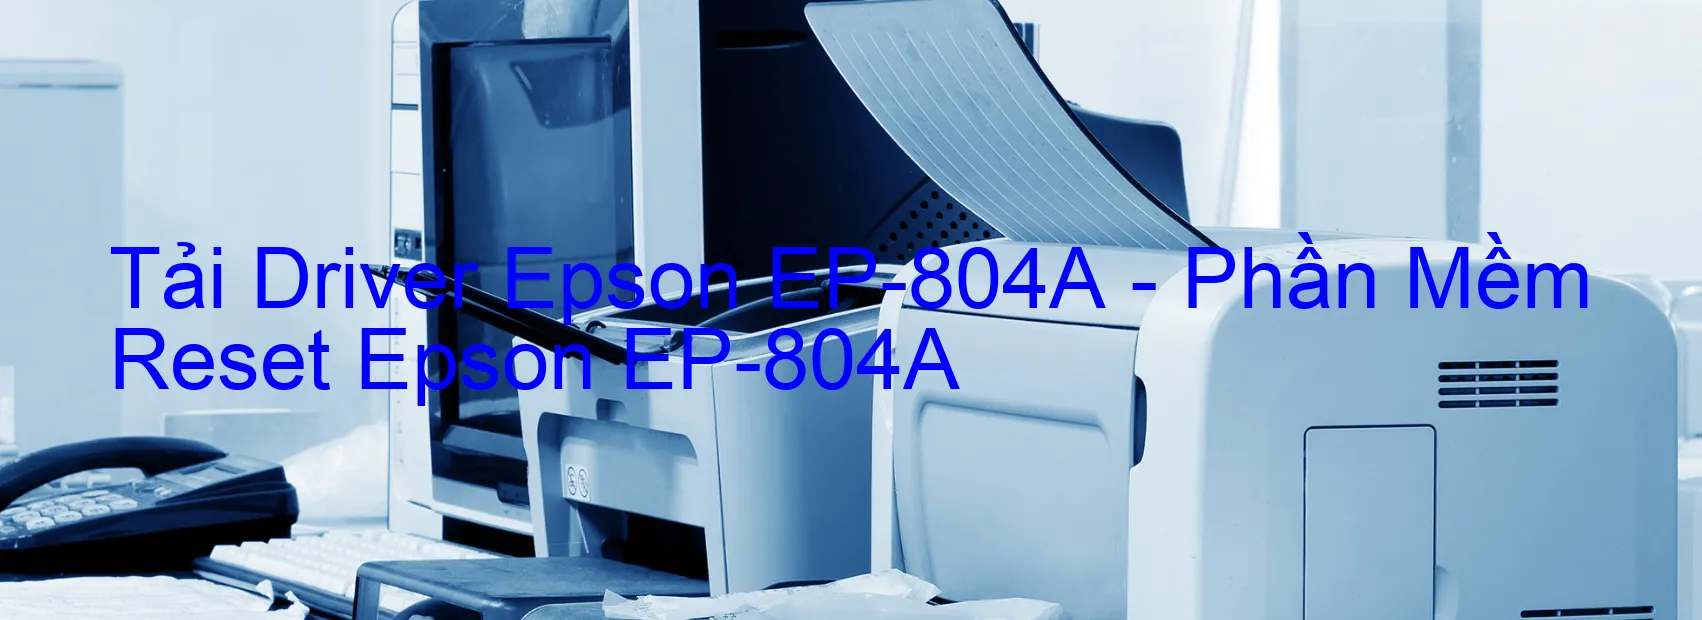 Driver Epson EP-804A, Phần Mềm Reset Epson EP-804A